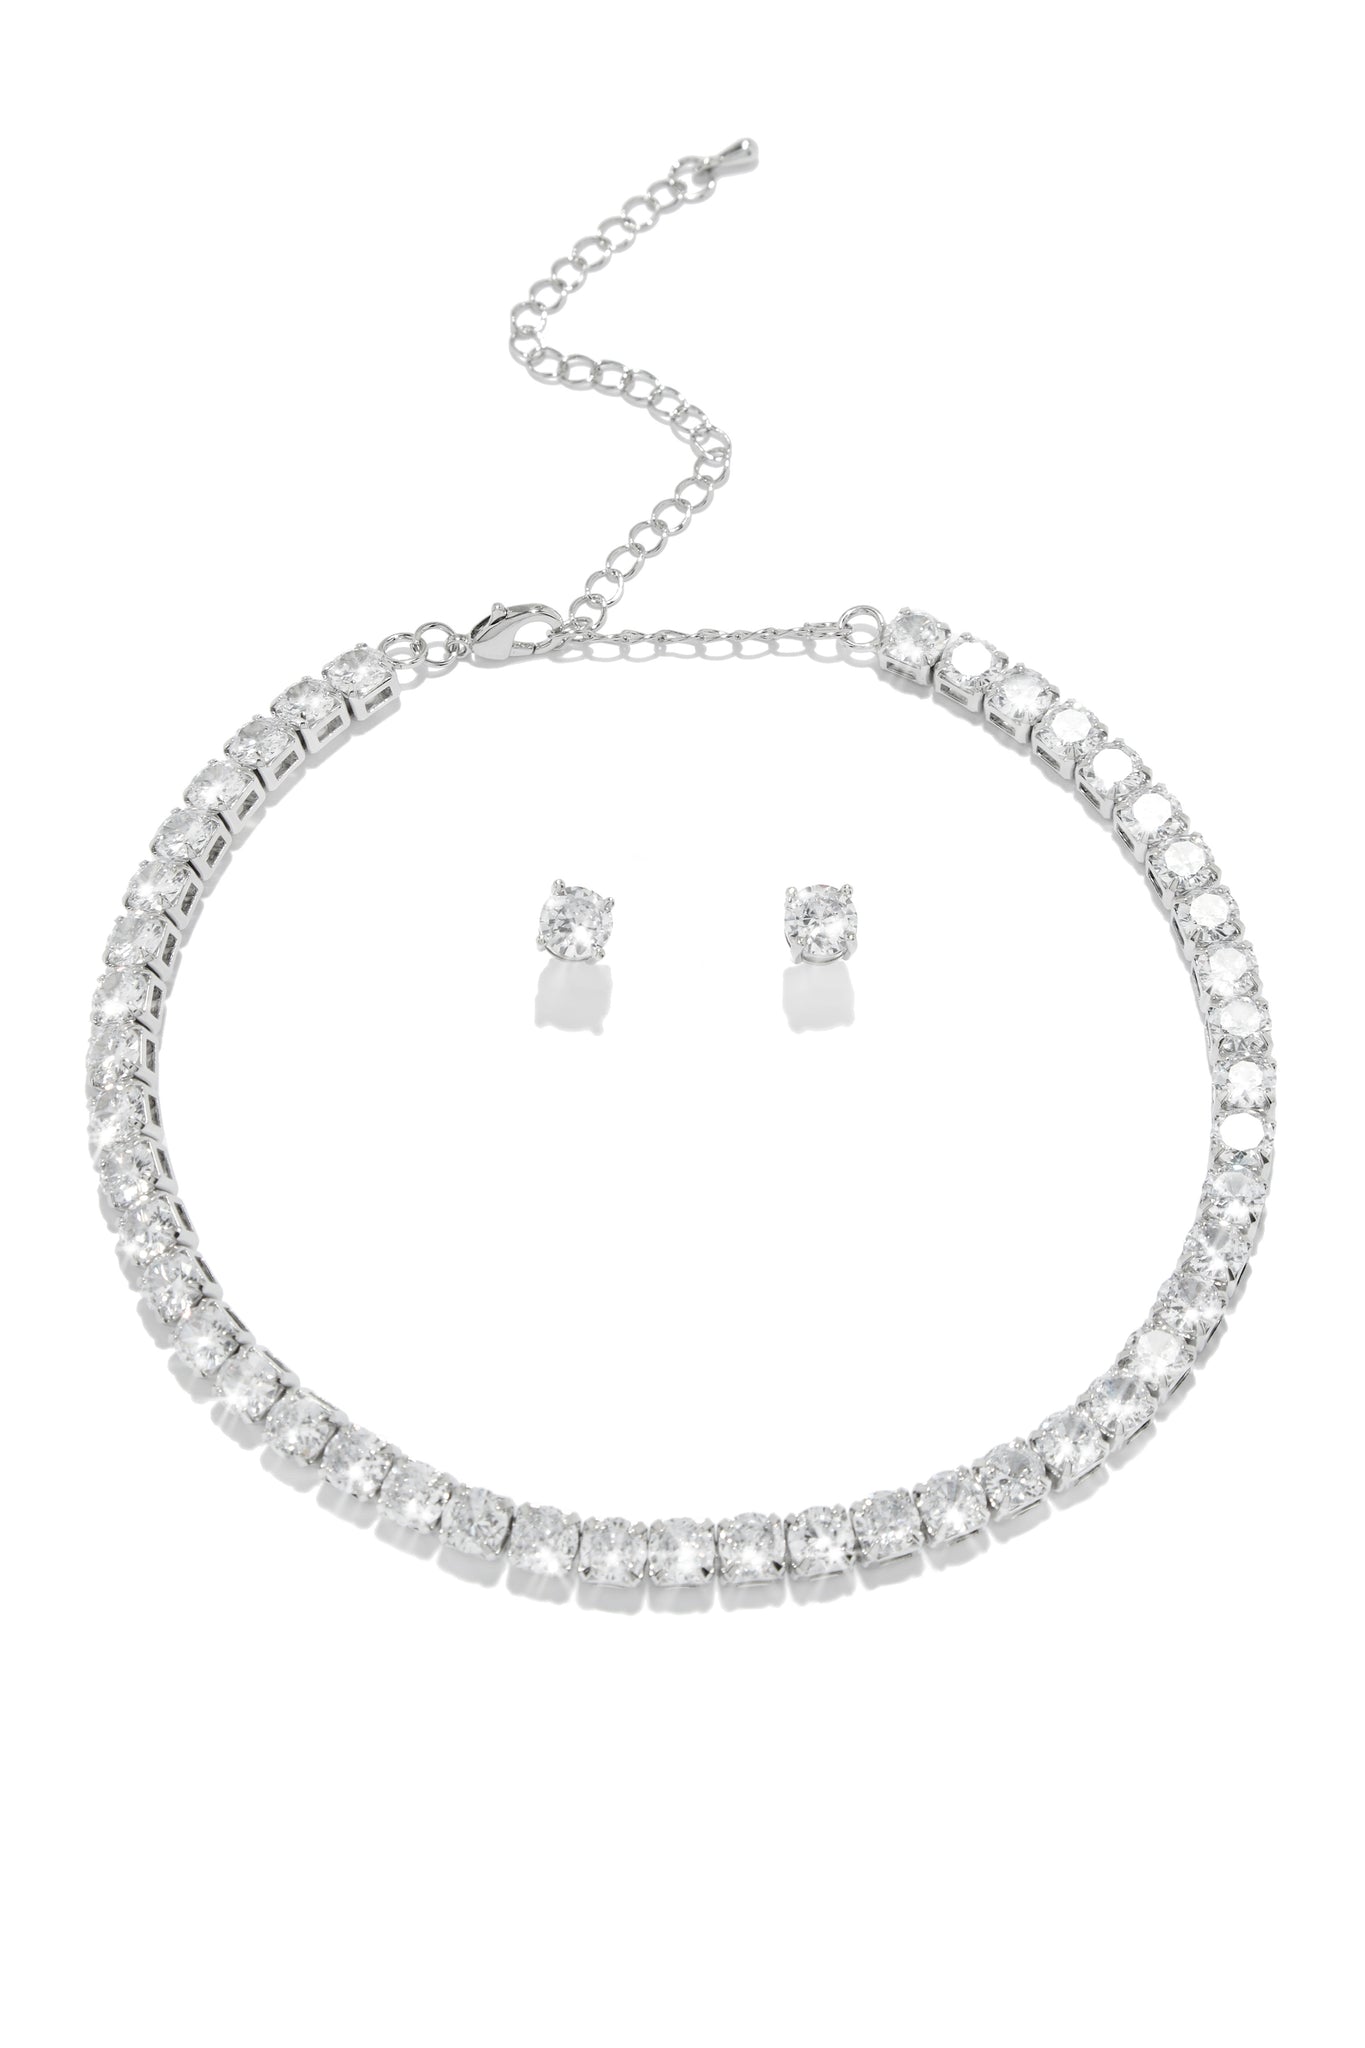 Two lines of 18K White Gold & Diamond Necklace Set - NE-2635